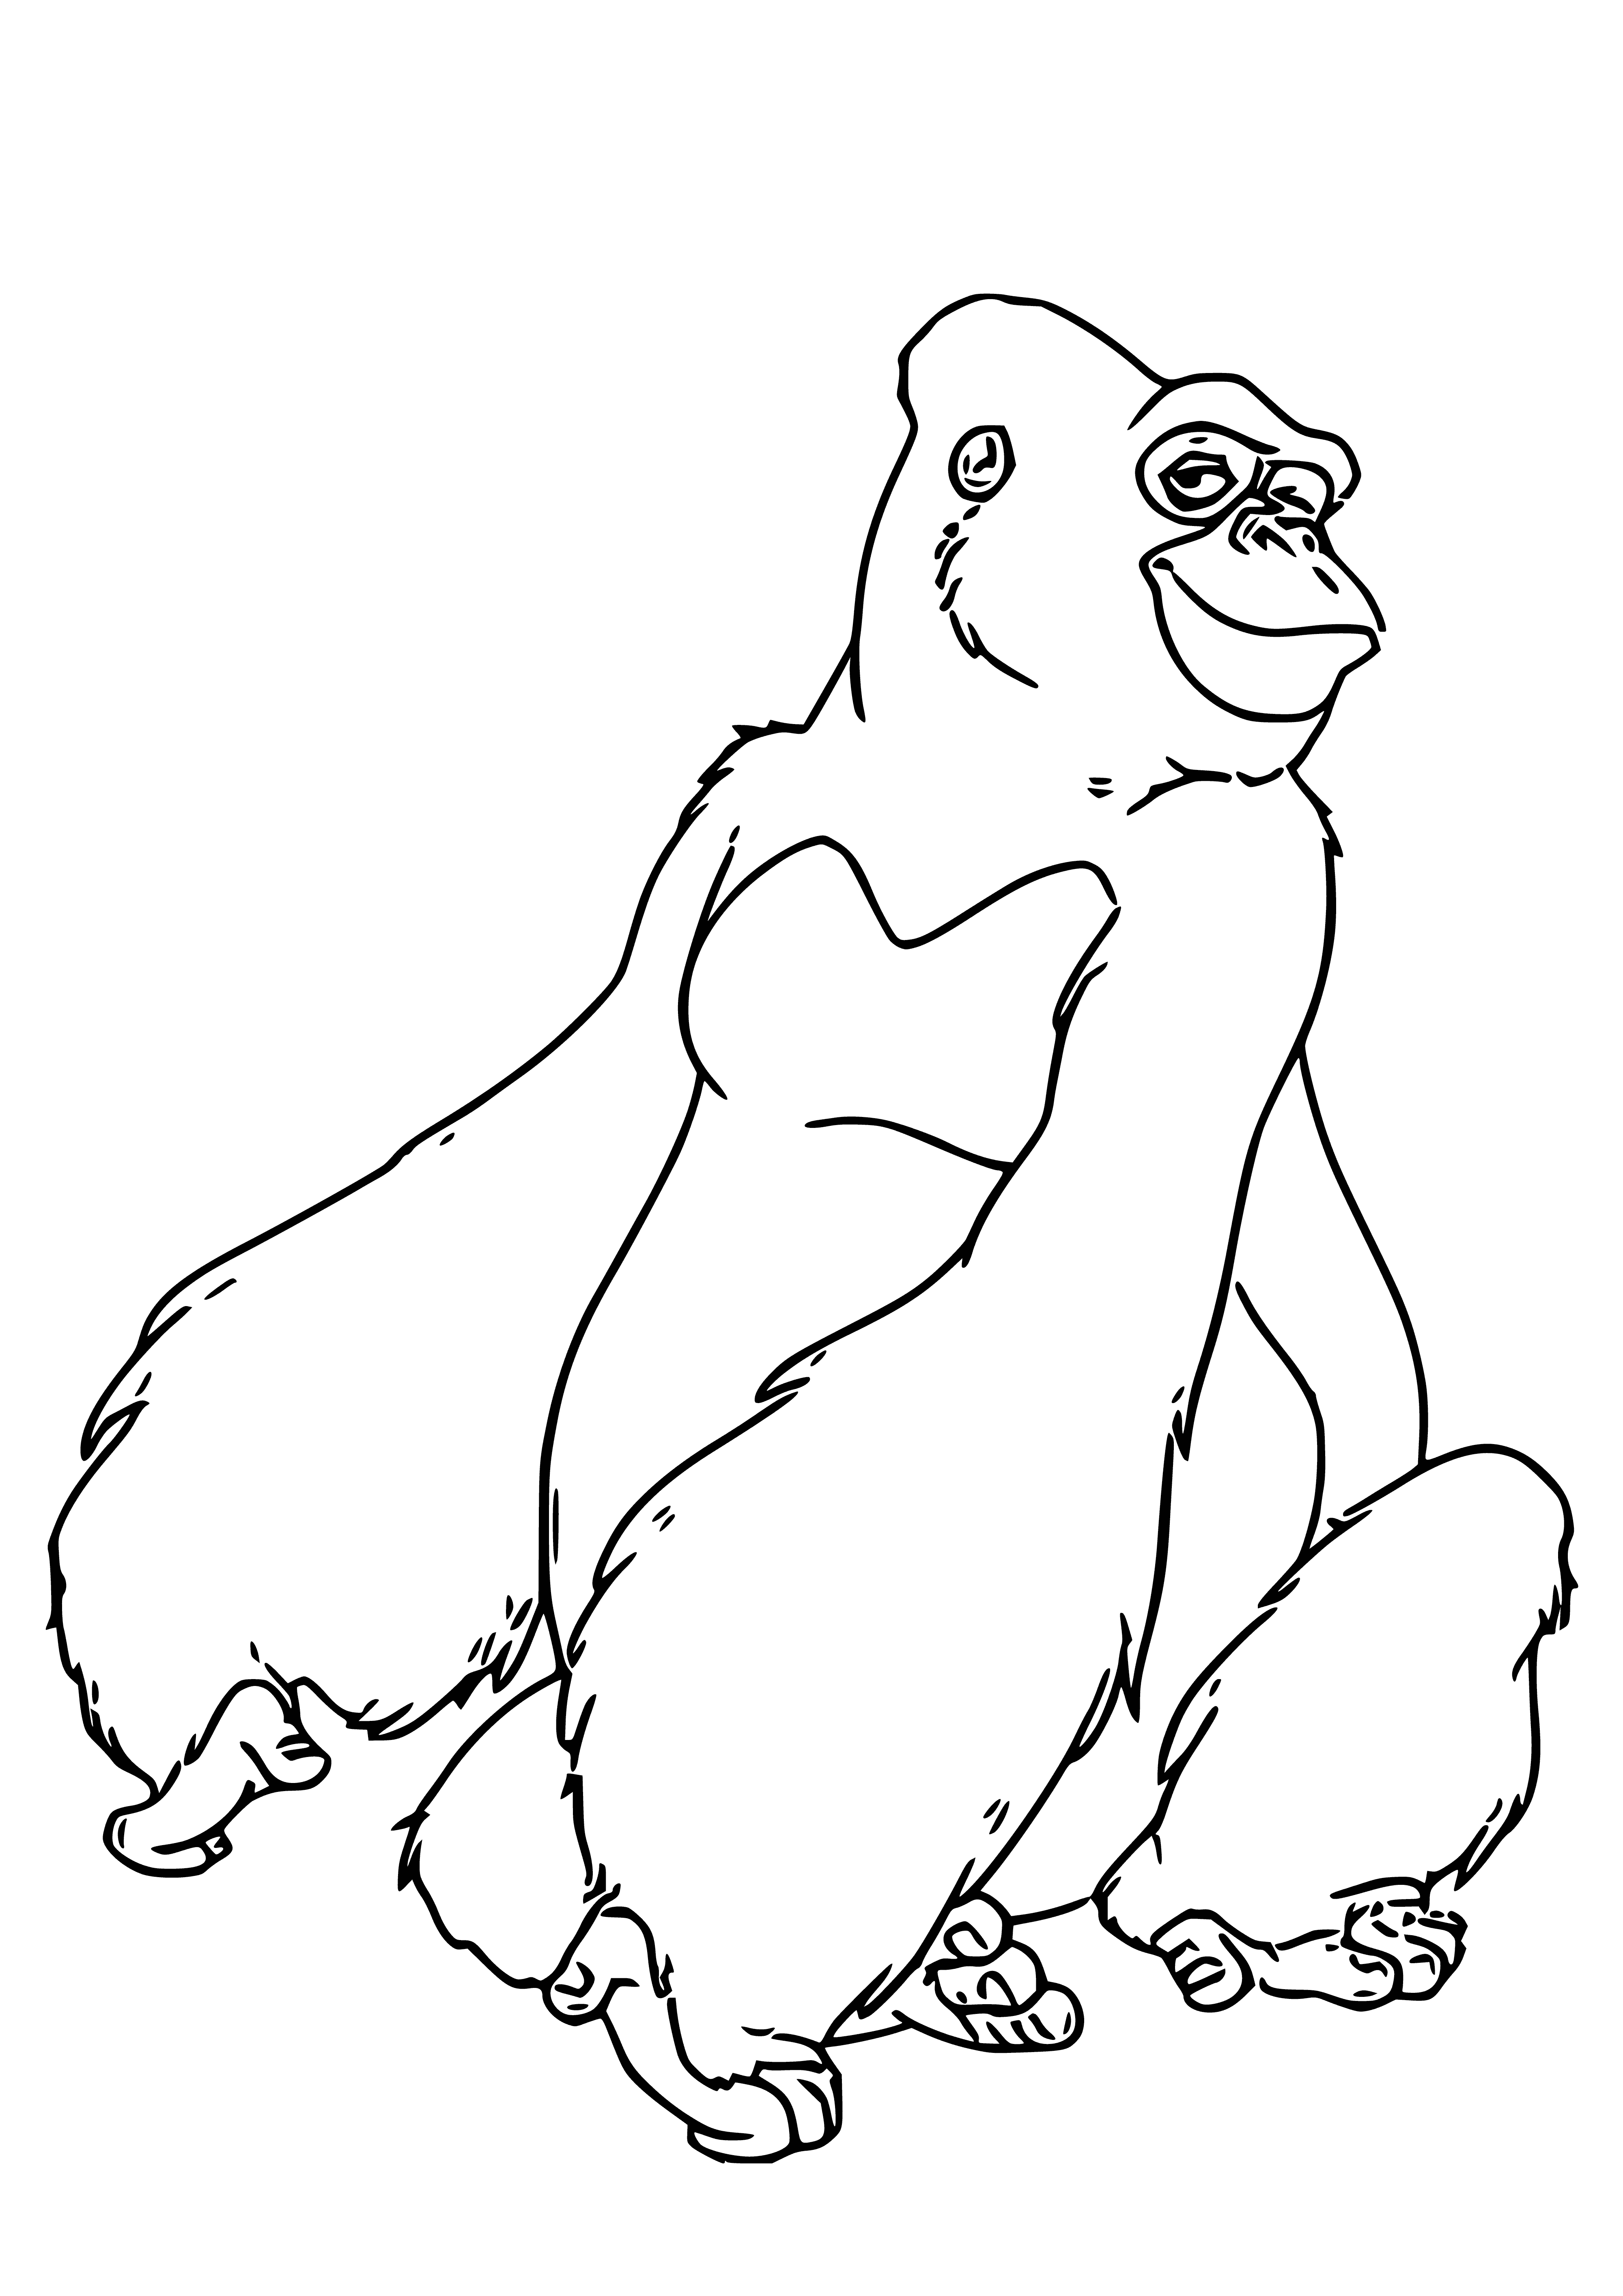 Gorilla Kala coloring page